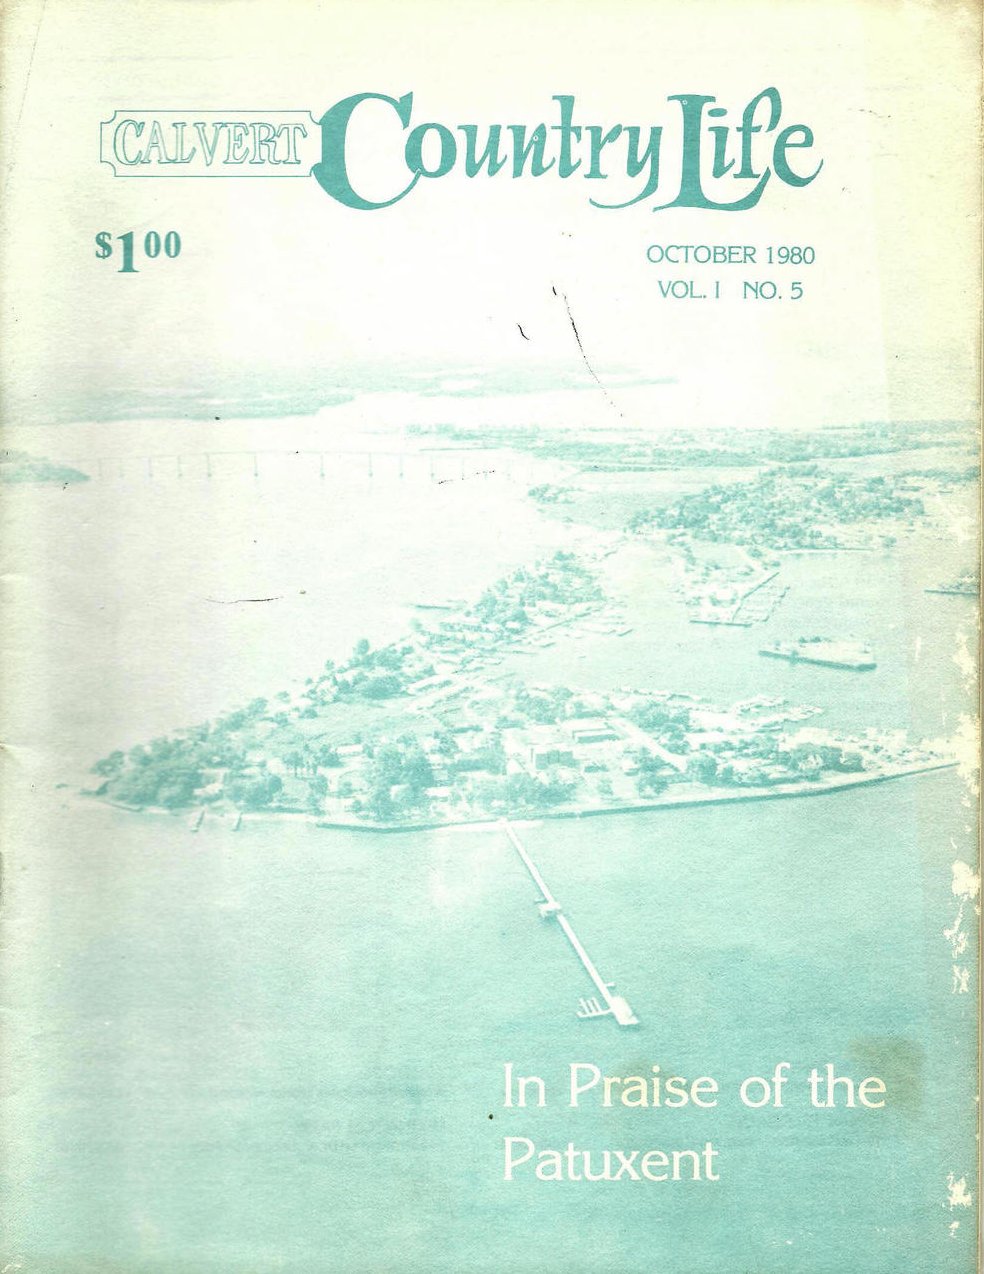 Calvert Country Life Vol 1 No 5 October 1980 Vintage Magazine